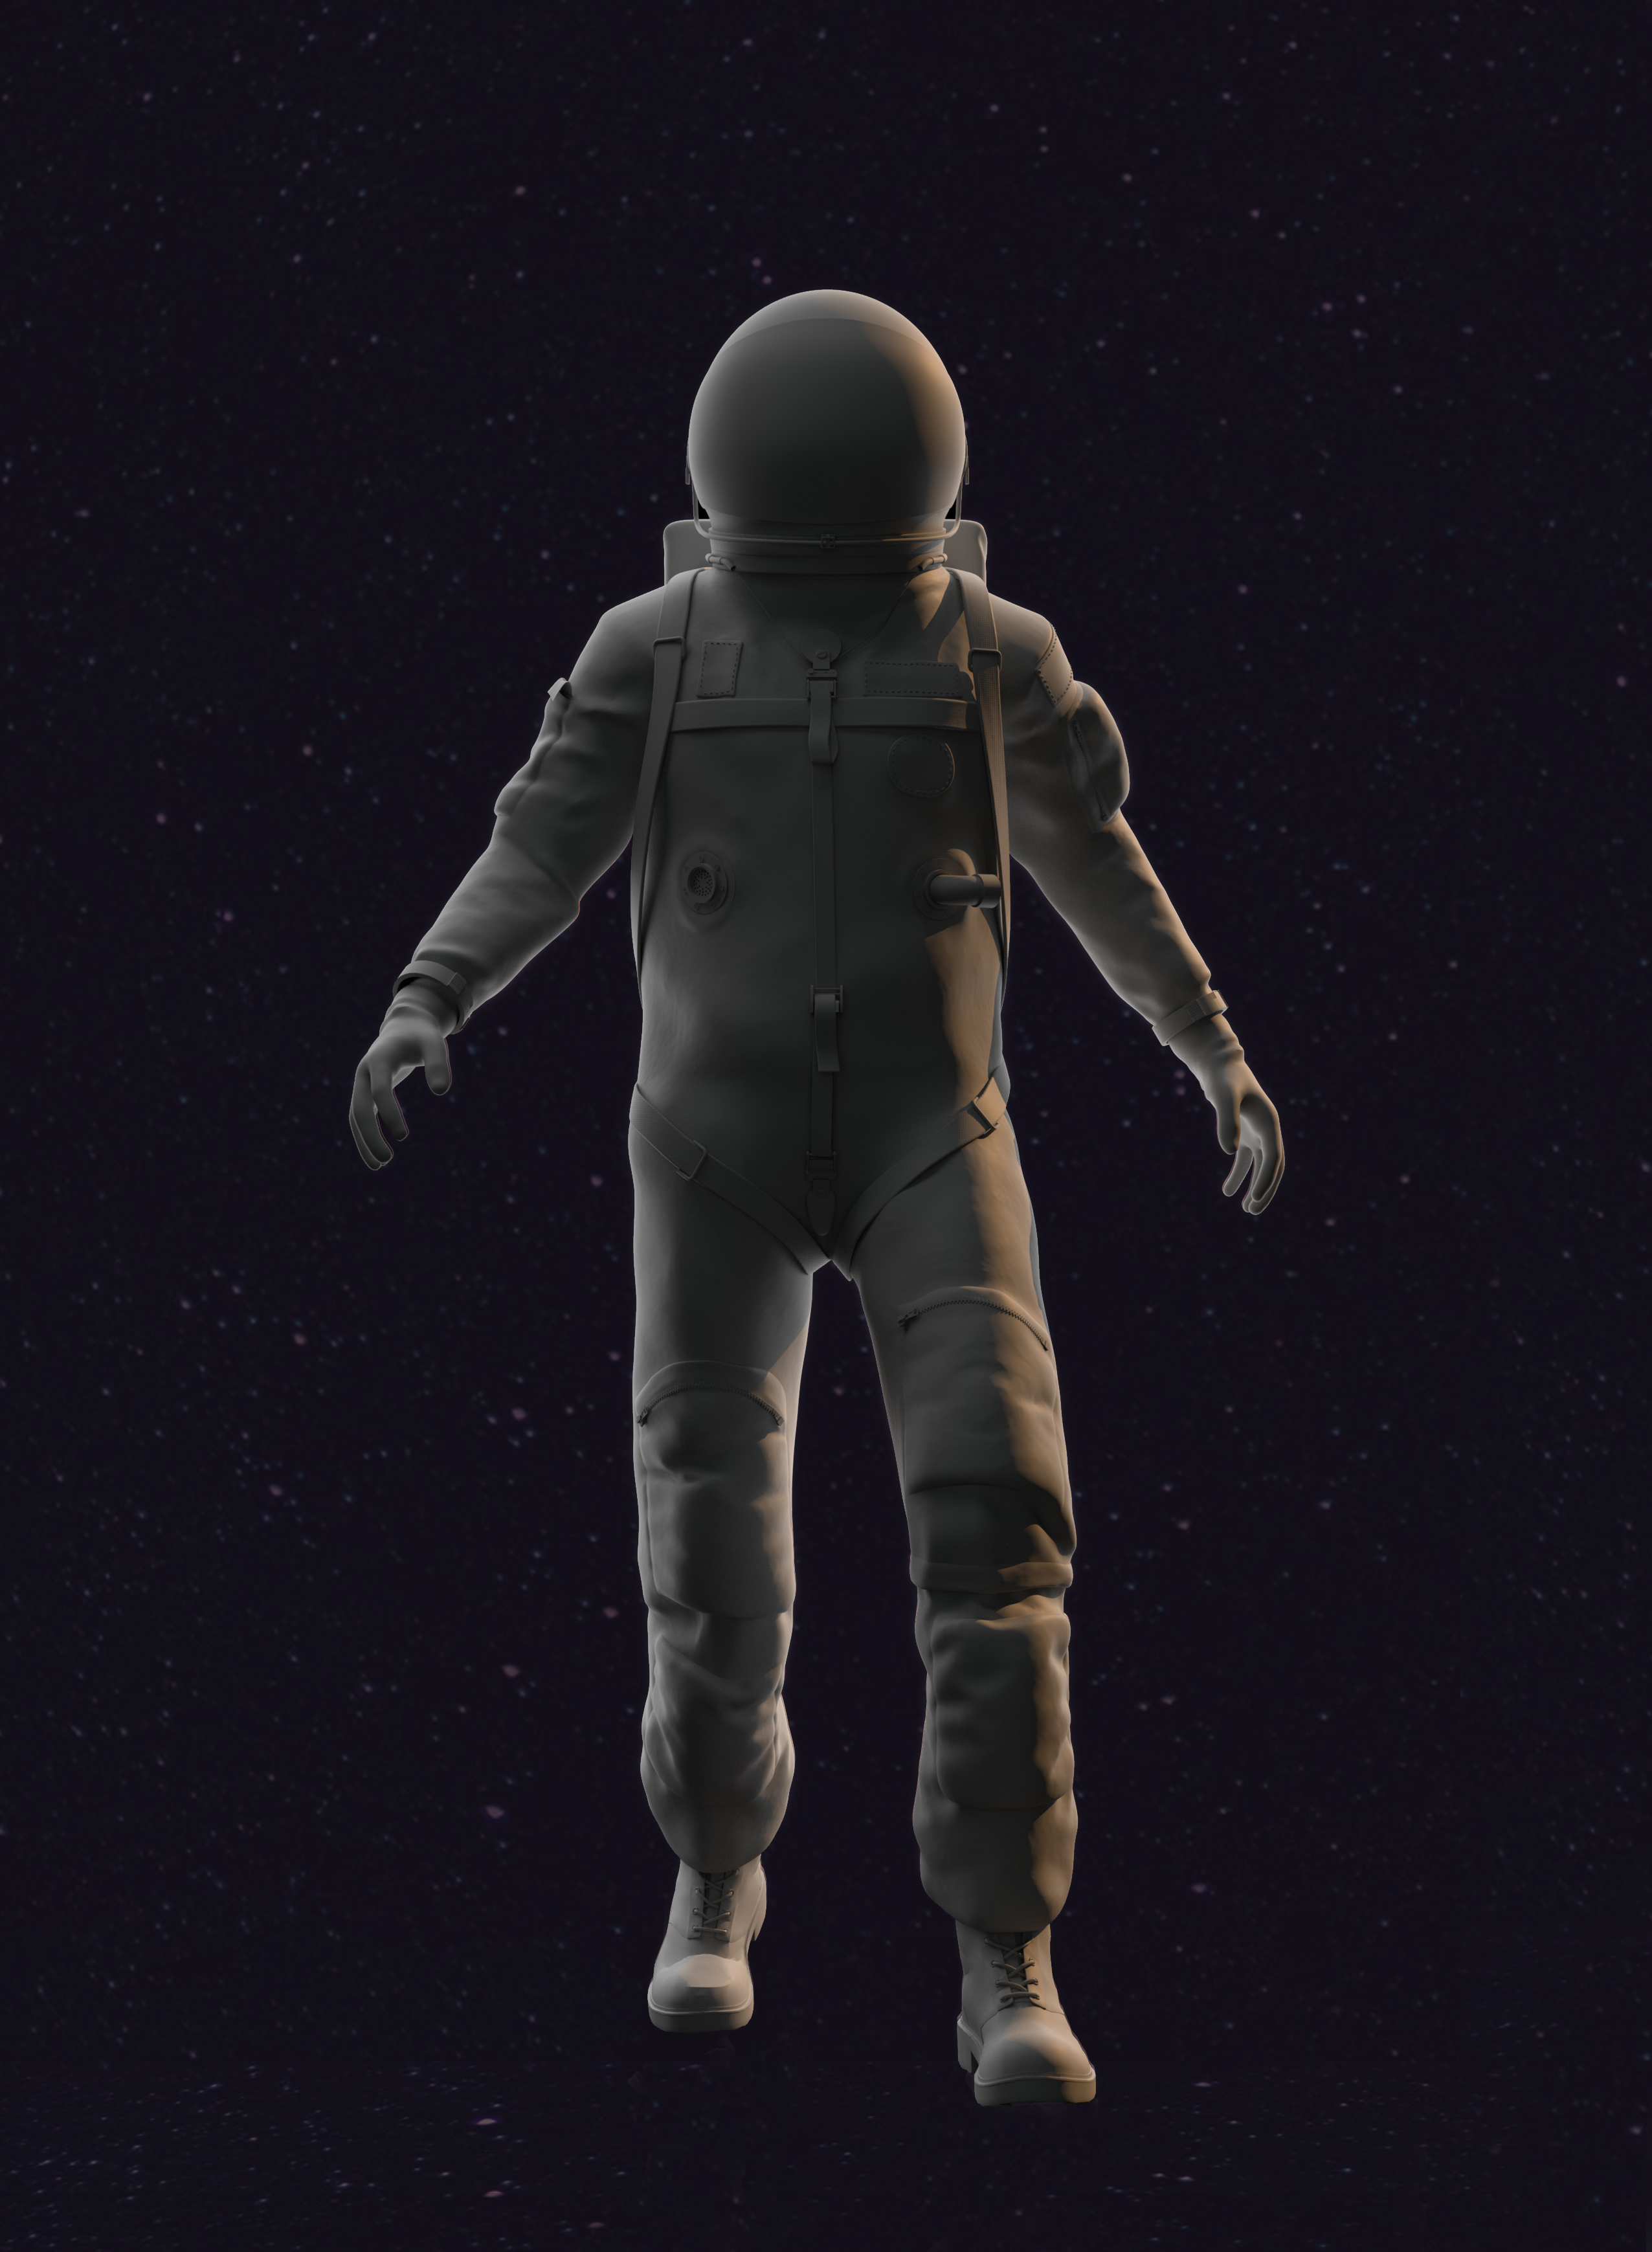 Astronaut_compoGRAY.jpg